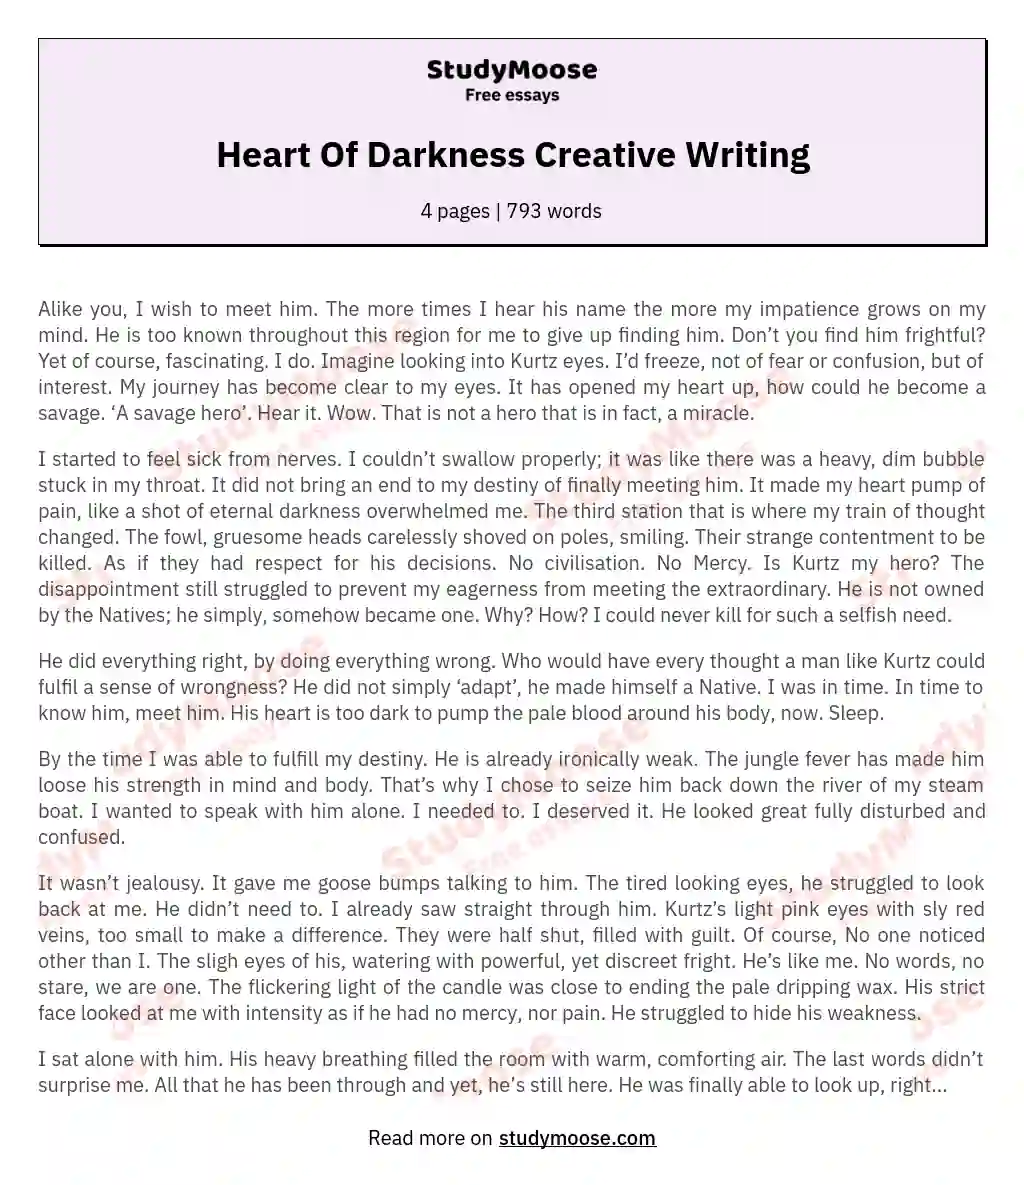 Heart Of Darkness Creative Writing essay